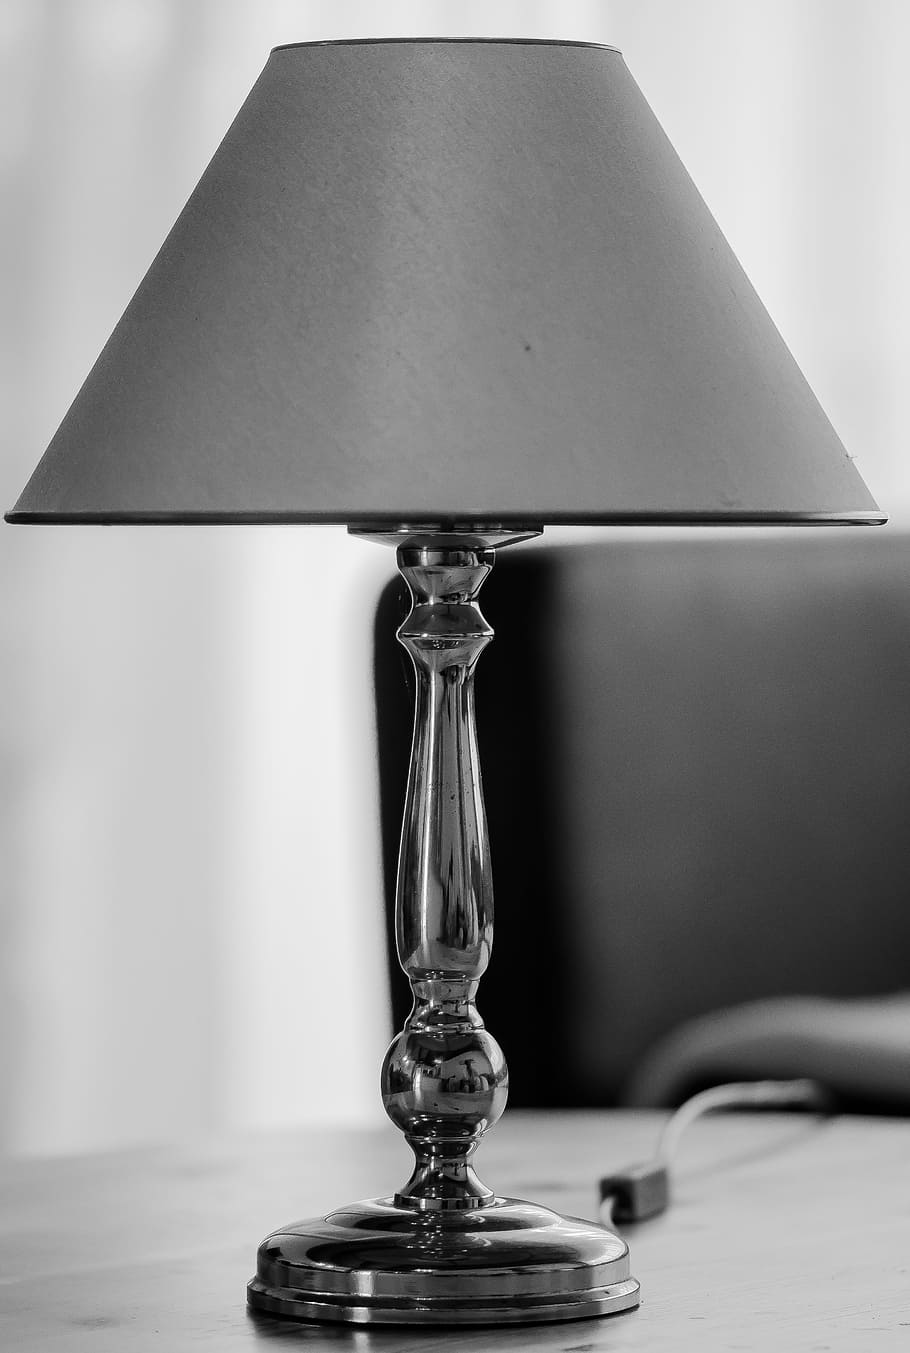 Table Lamp, Lampshade, Decorative, lighting, retro, atmosphere